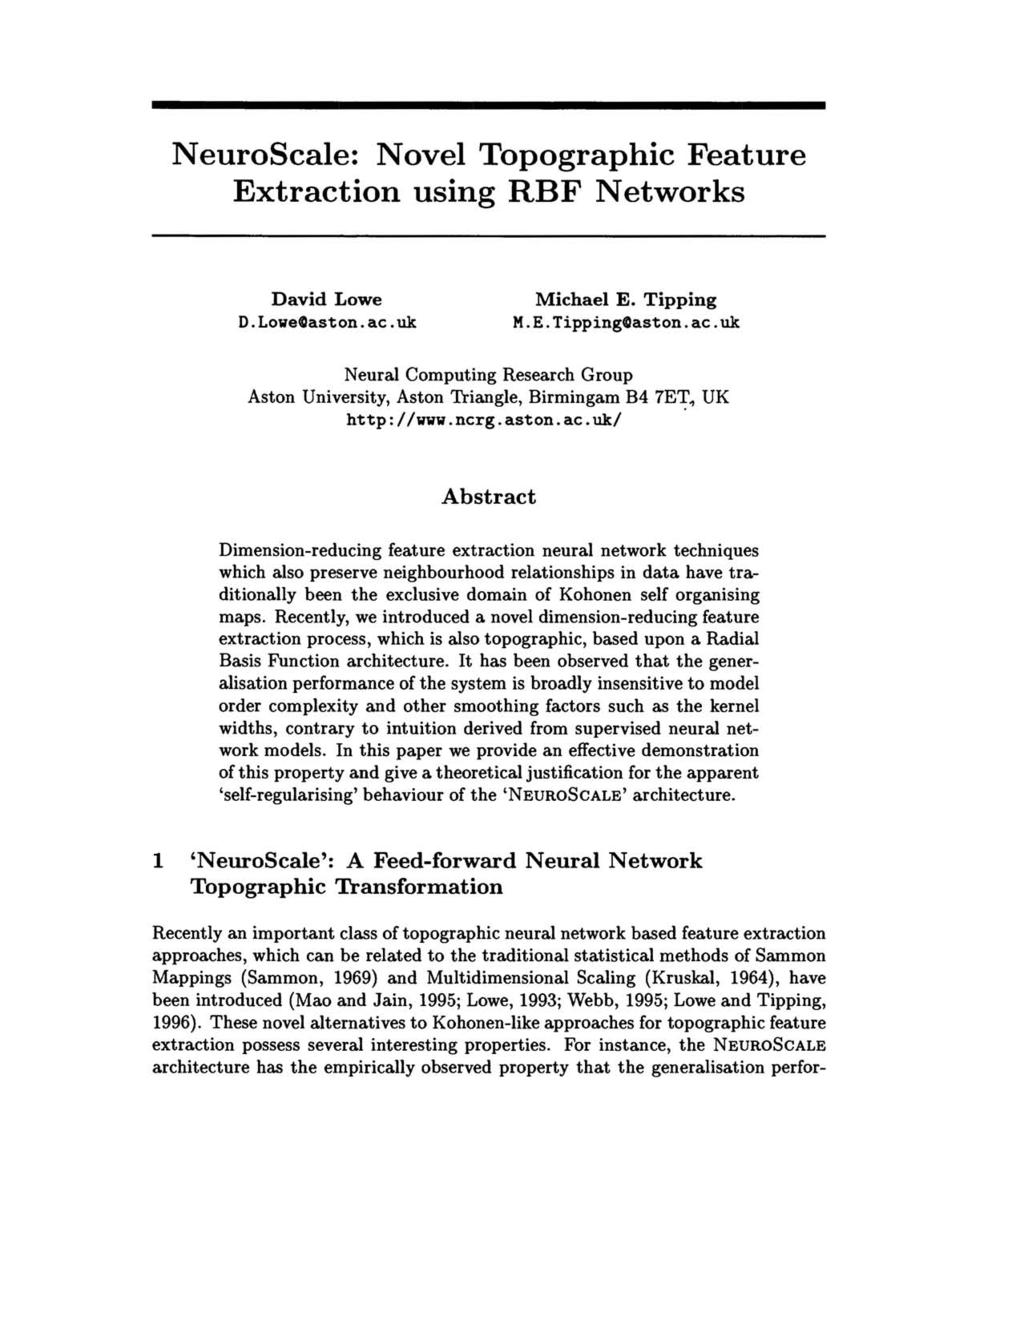 NeuroScale: Novel Topographic Feature Extraction using RBF Networks David Lowe D.LoweOaston.ac.uk Michael E. Tipping H.E.TippingOaston.ac.uk Neural Computing Research Group Aston University, Aston Triangle, Birmingam B4 7ET1 UK http://www.